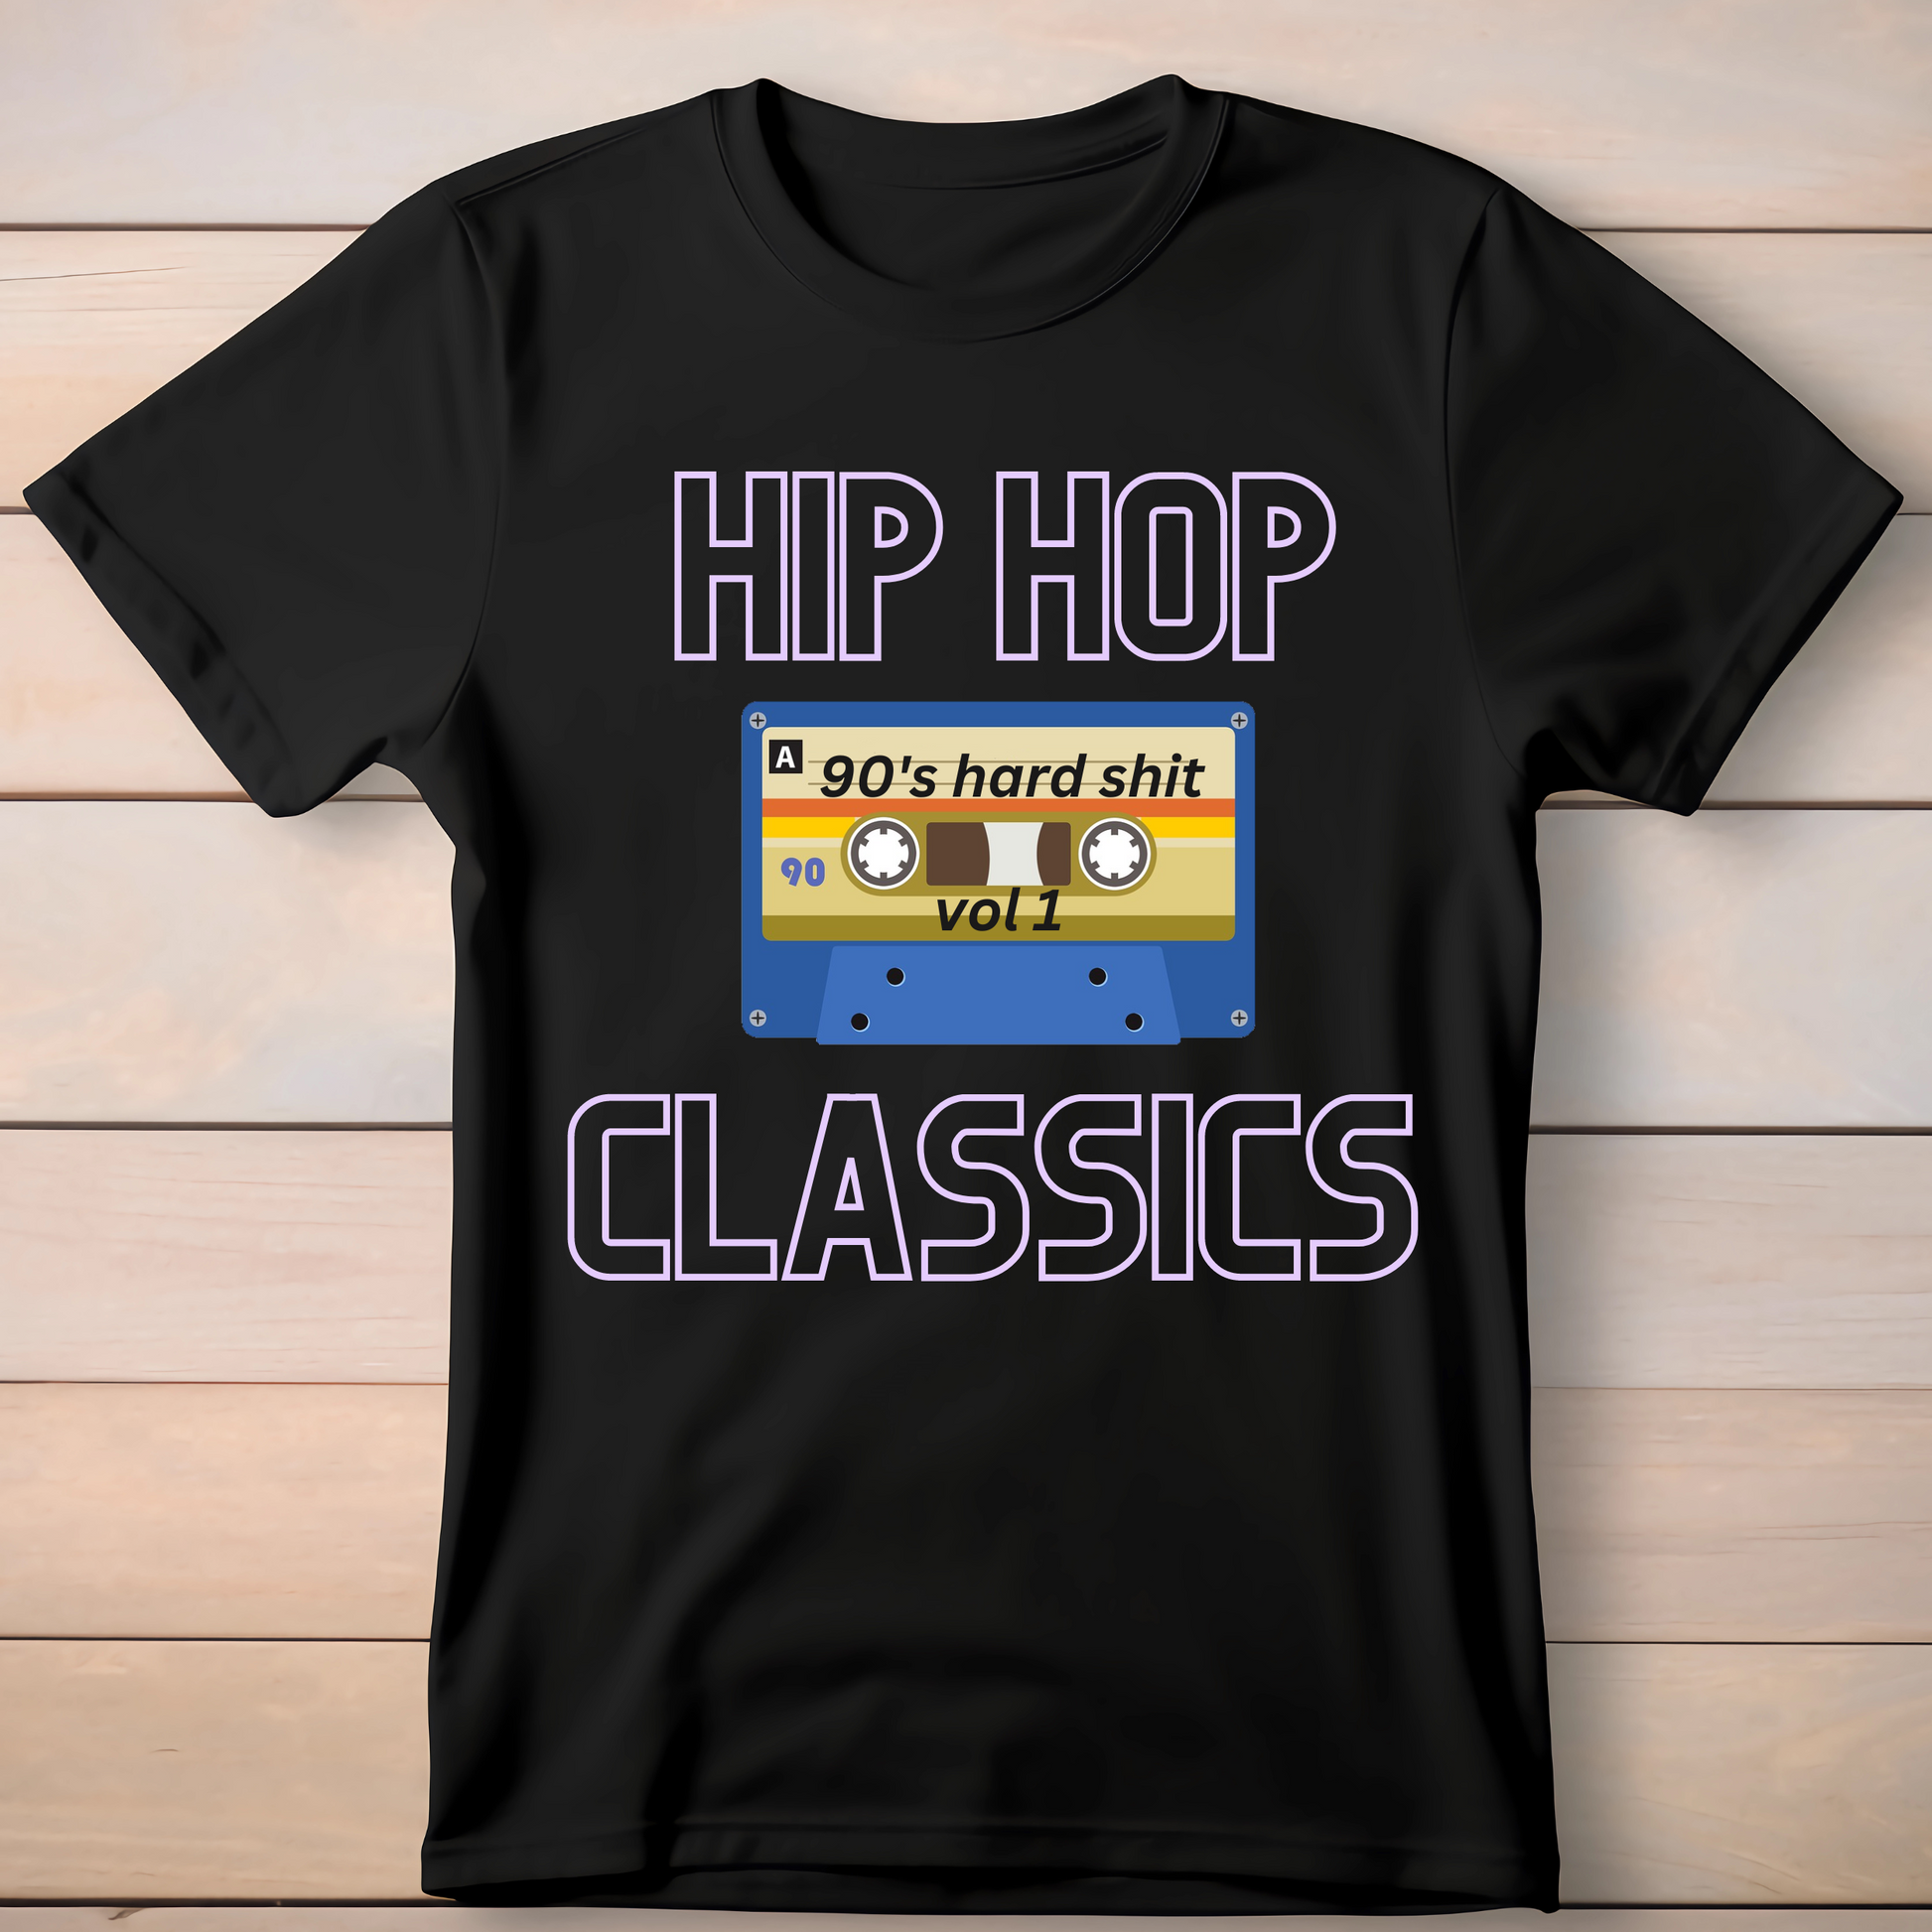 Hip Hop Cassette classic Shirt Tee - Premium t-shirt from Lees Krazy Teez - Just $19.95! Shop now at Lees Krazy Teez